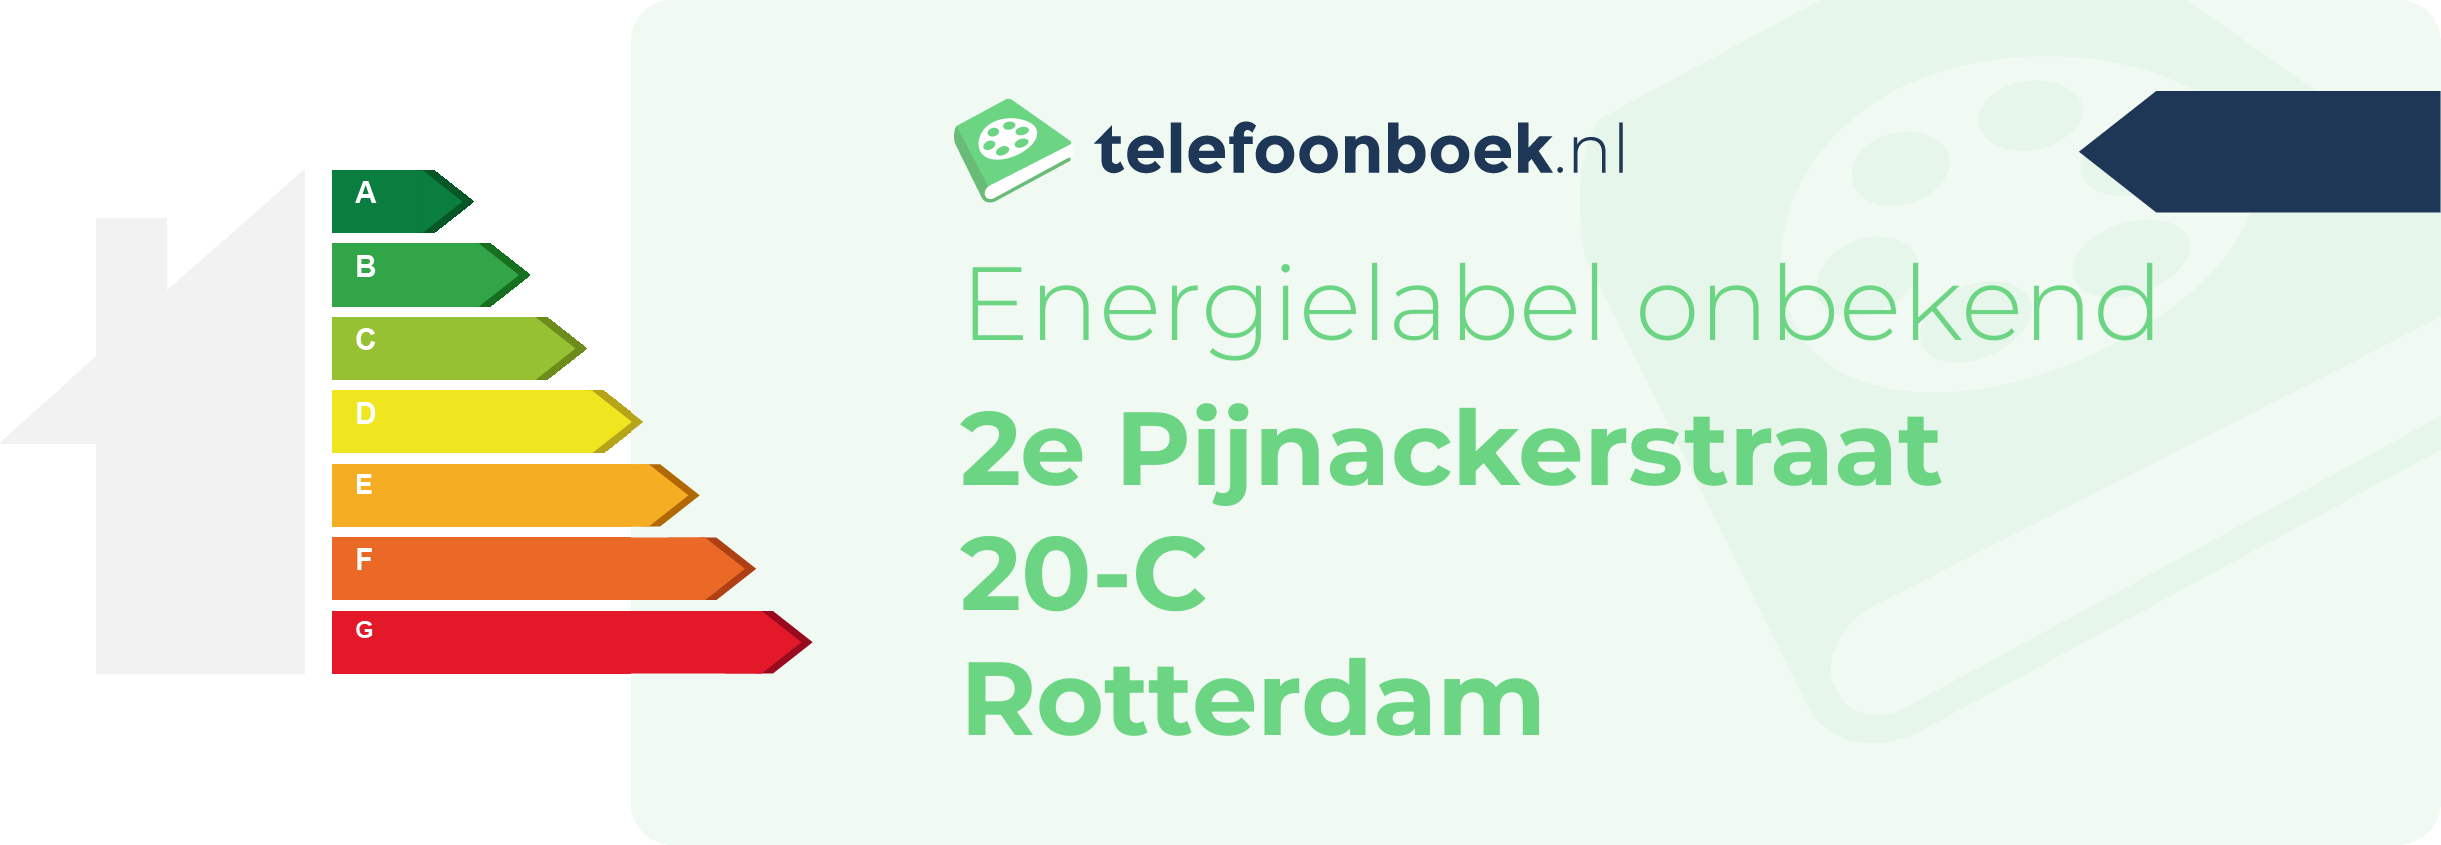 Energielabel 2e Pijnackerstraat 20-C Rotterdam